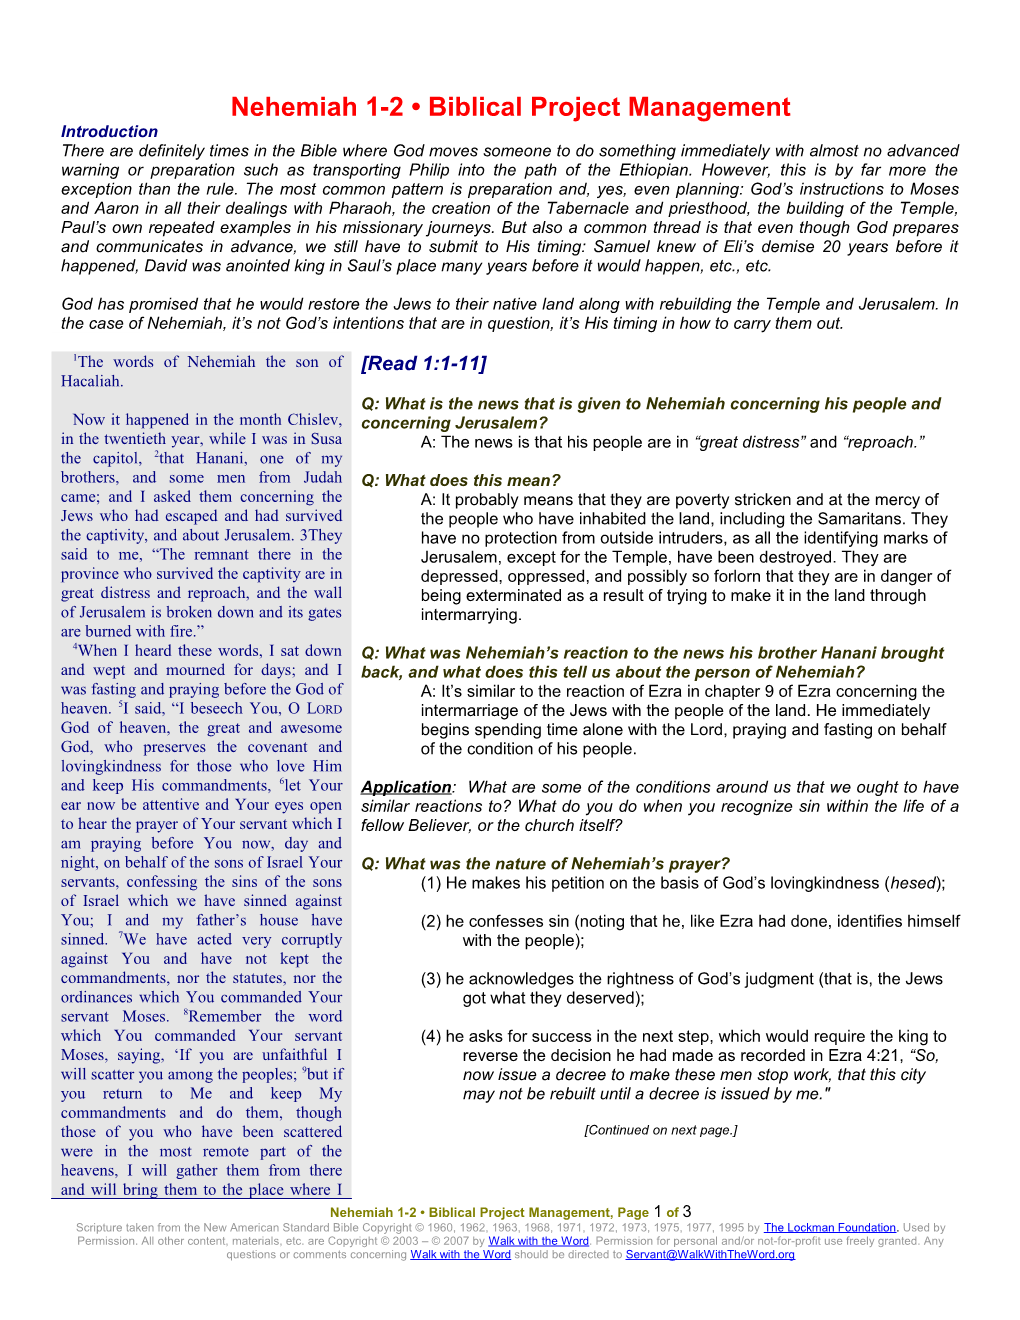 Nehemiah 1-2 Biblical Project Management